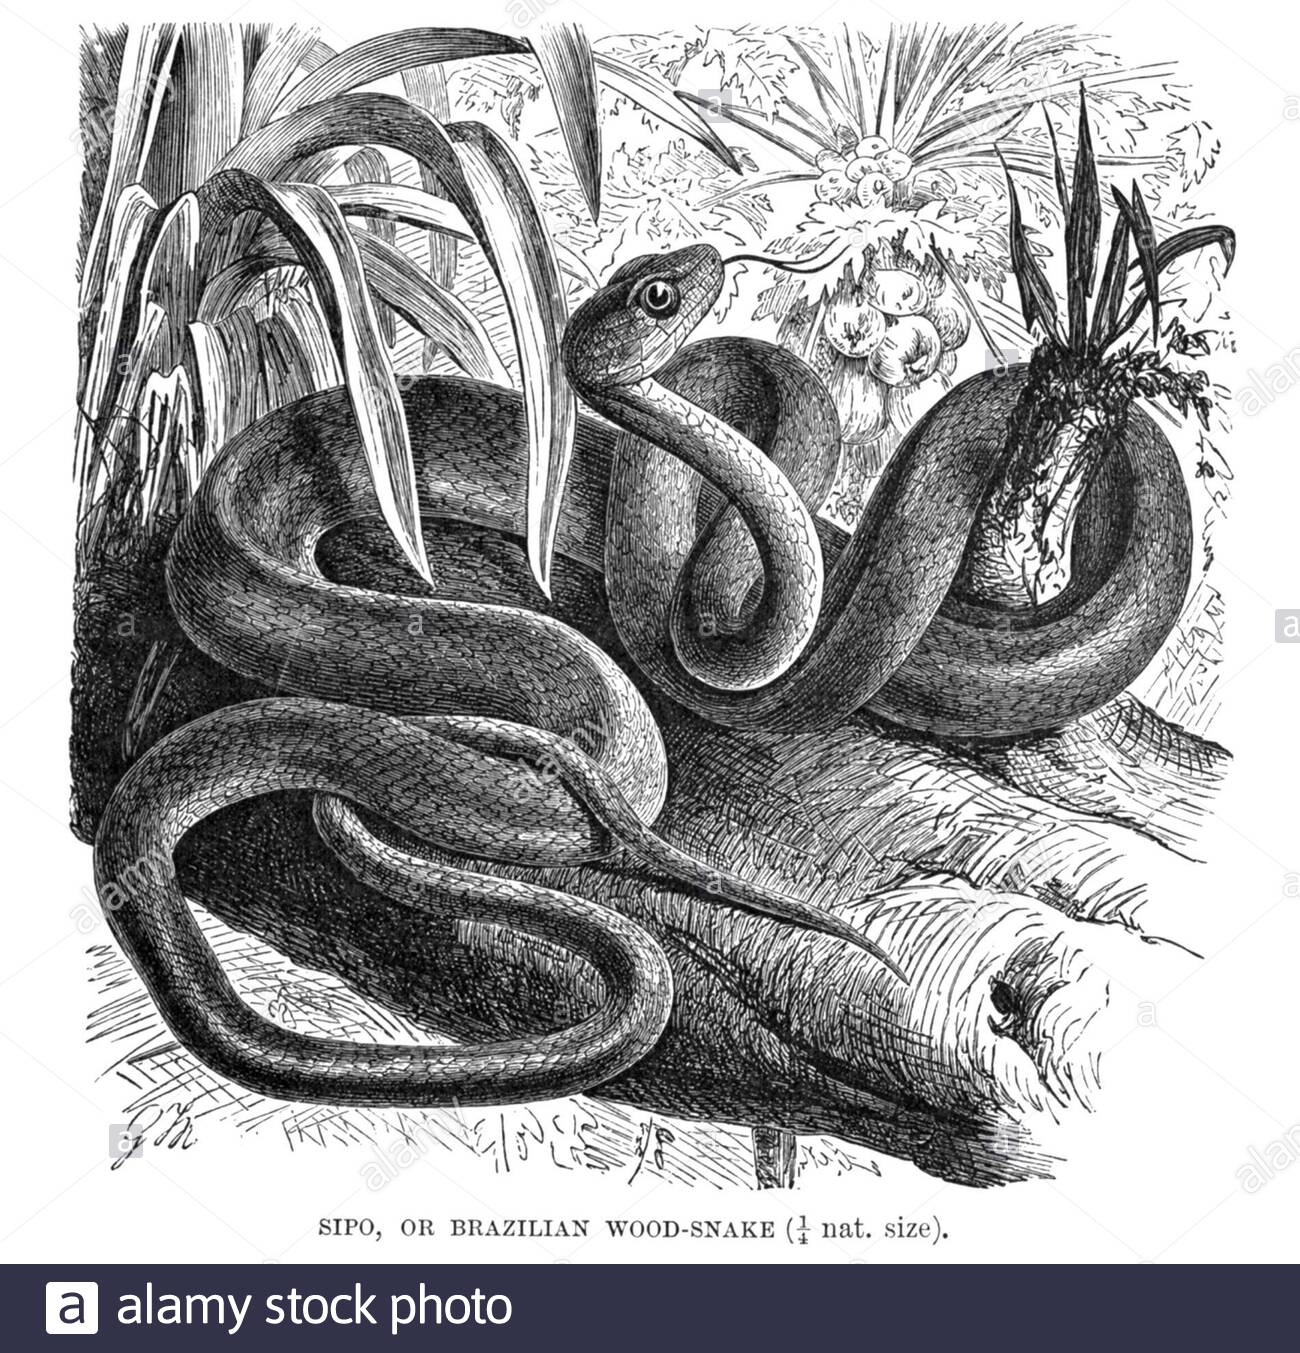 Sipo Snake (Brazilian Wood Snake), vintage illustration from 1896 Stock Photo